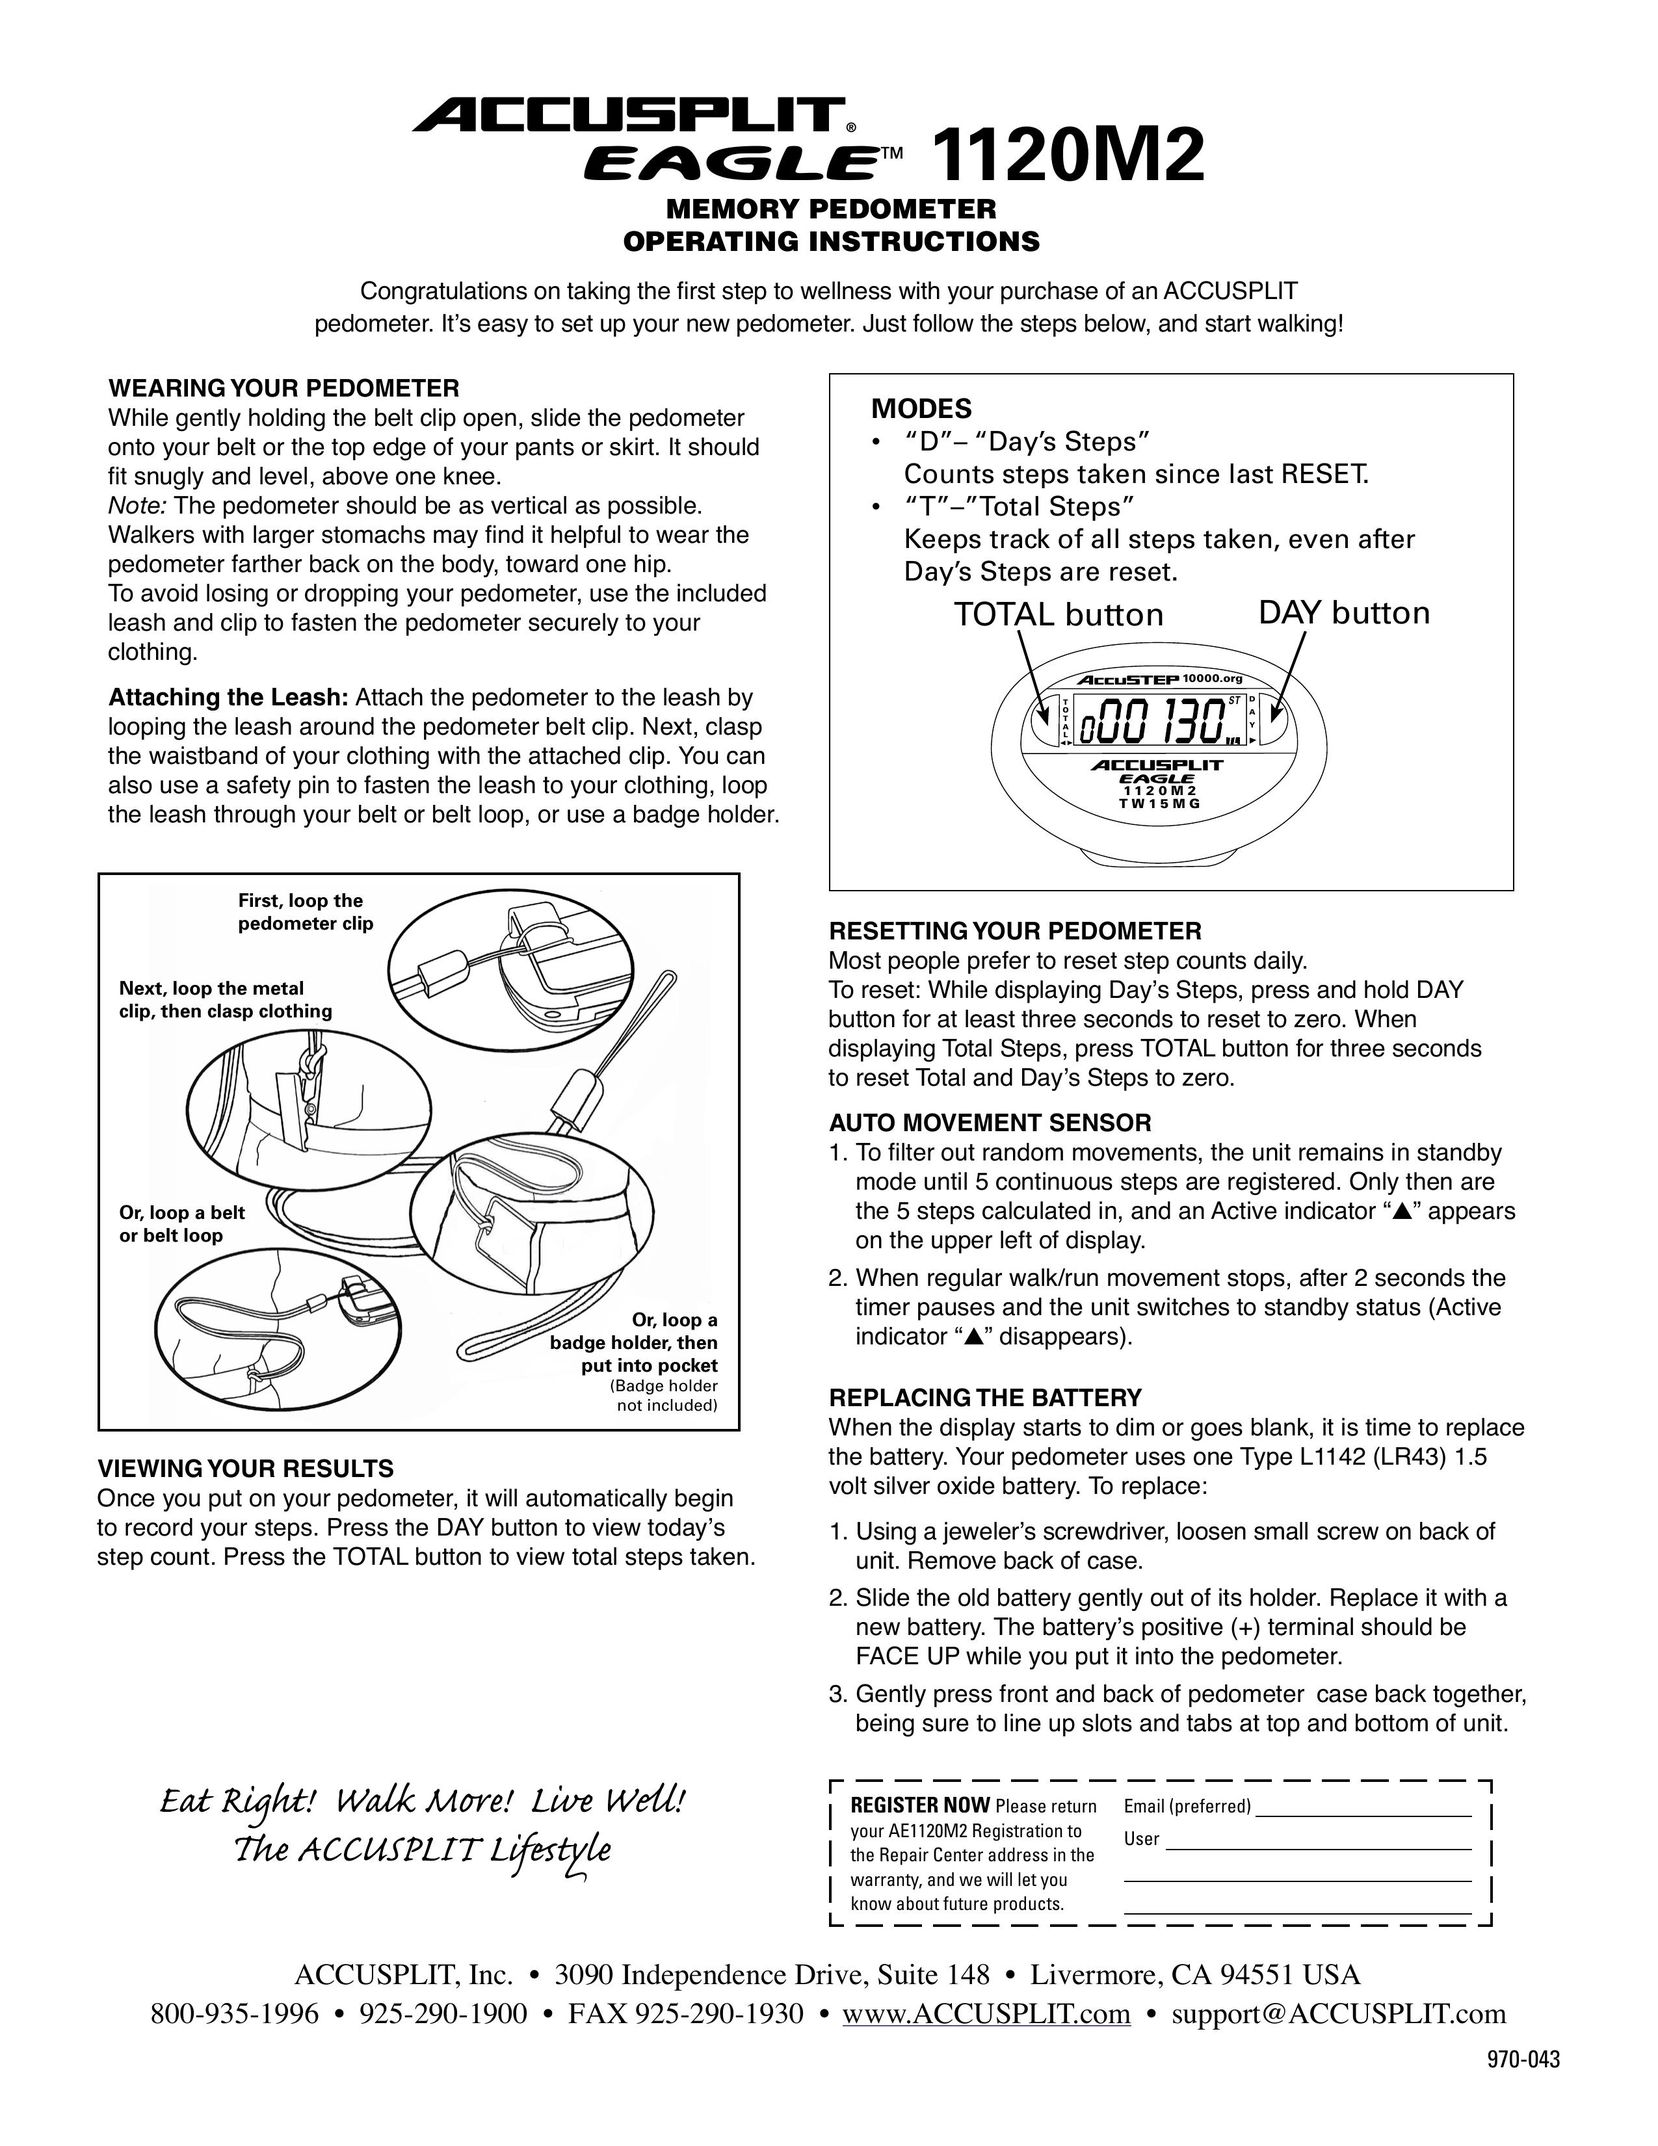 Accusplit 1120M2 Fitness Electronics User Manual